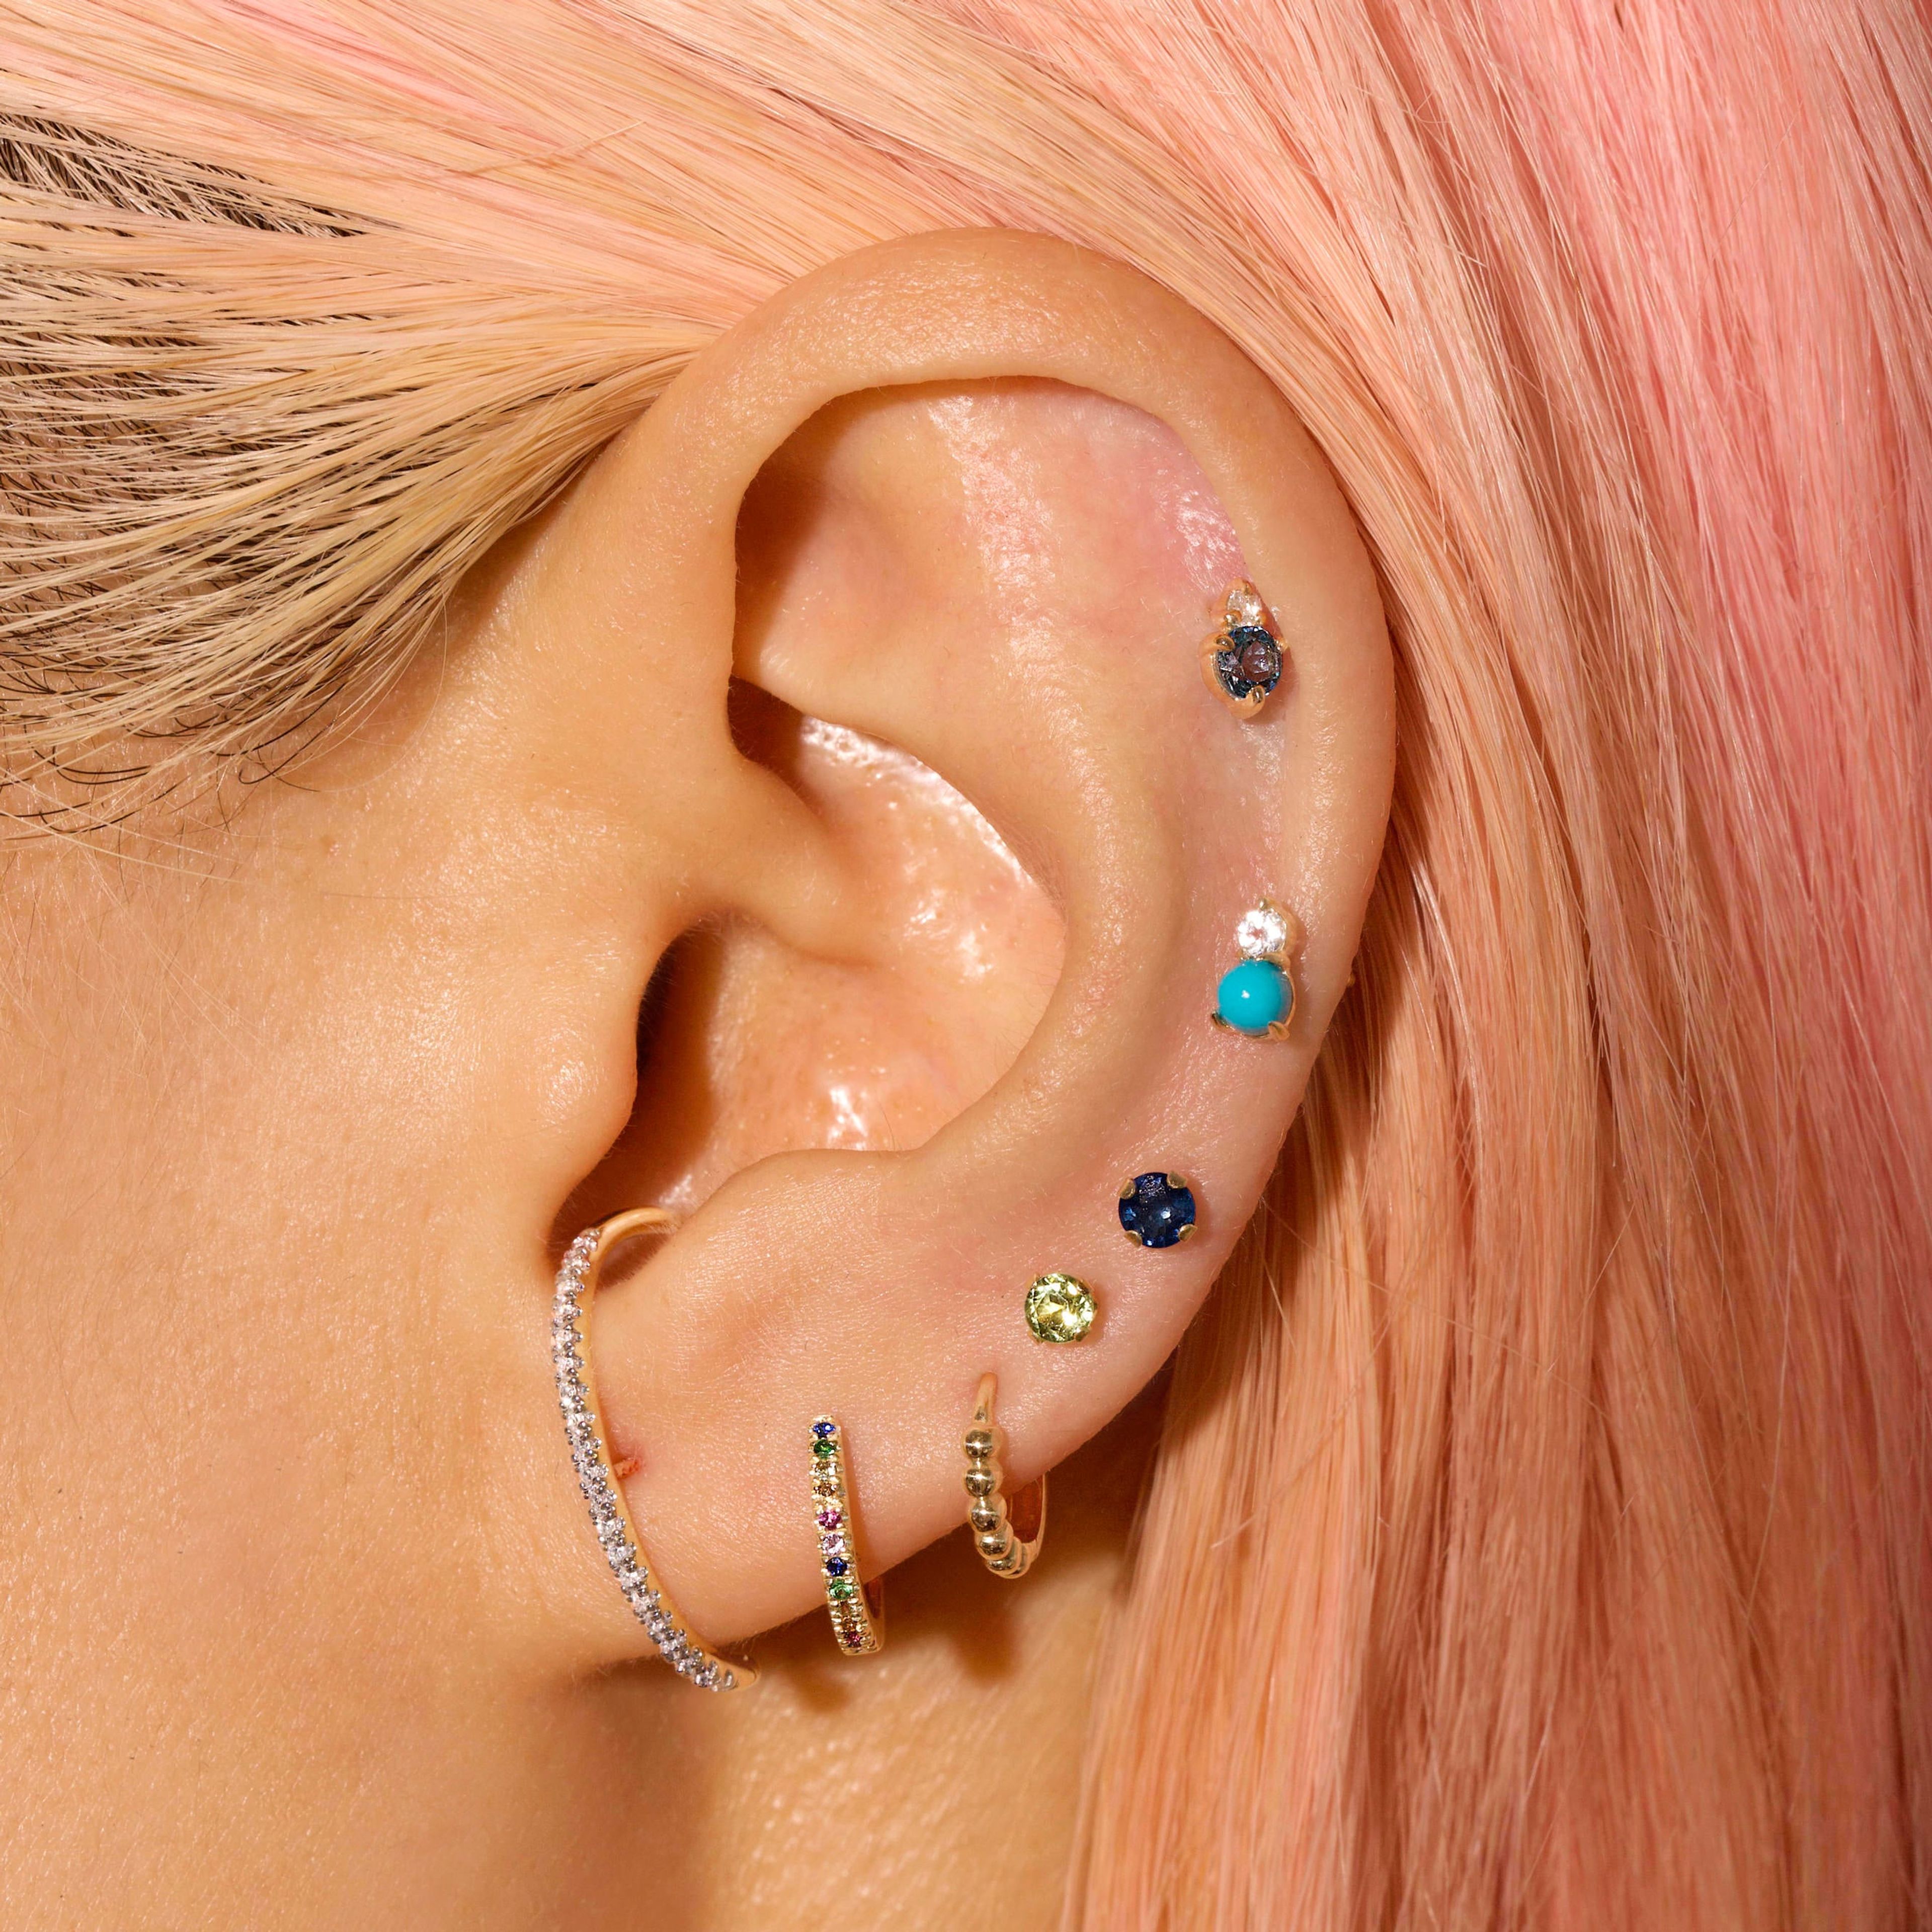 Tiny Birthstone Earrings